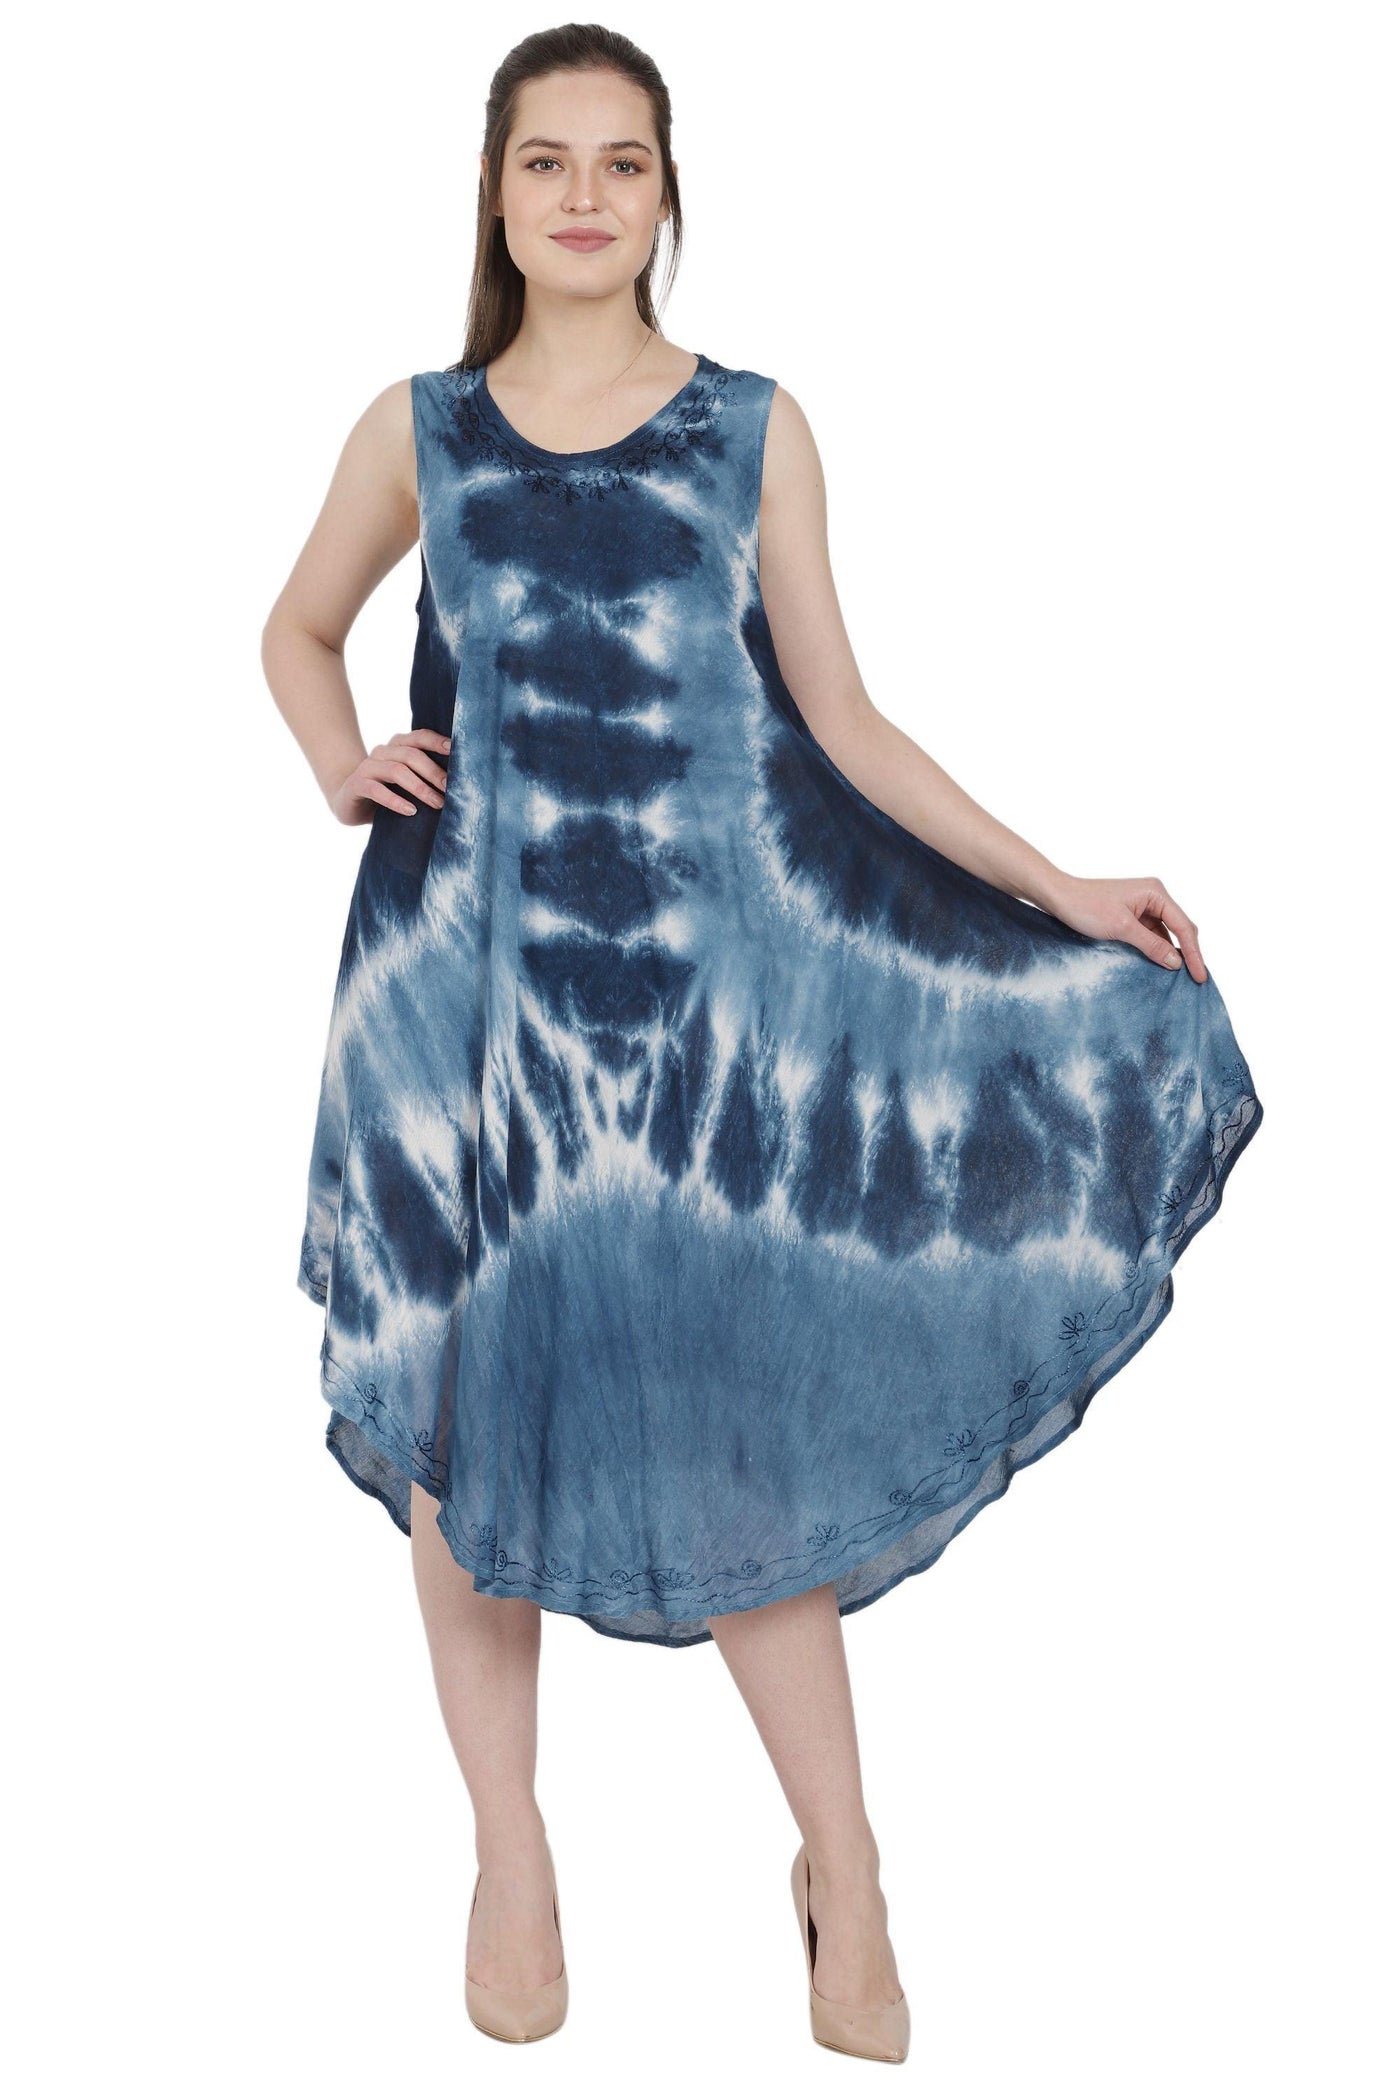 Trifecta Tie Dye Beach Umbrella Dress UD48-2304  - Advance Apparels Inc